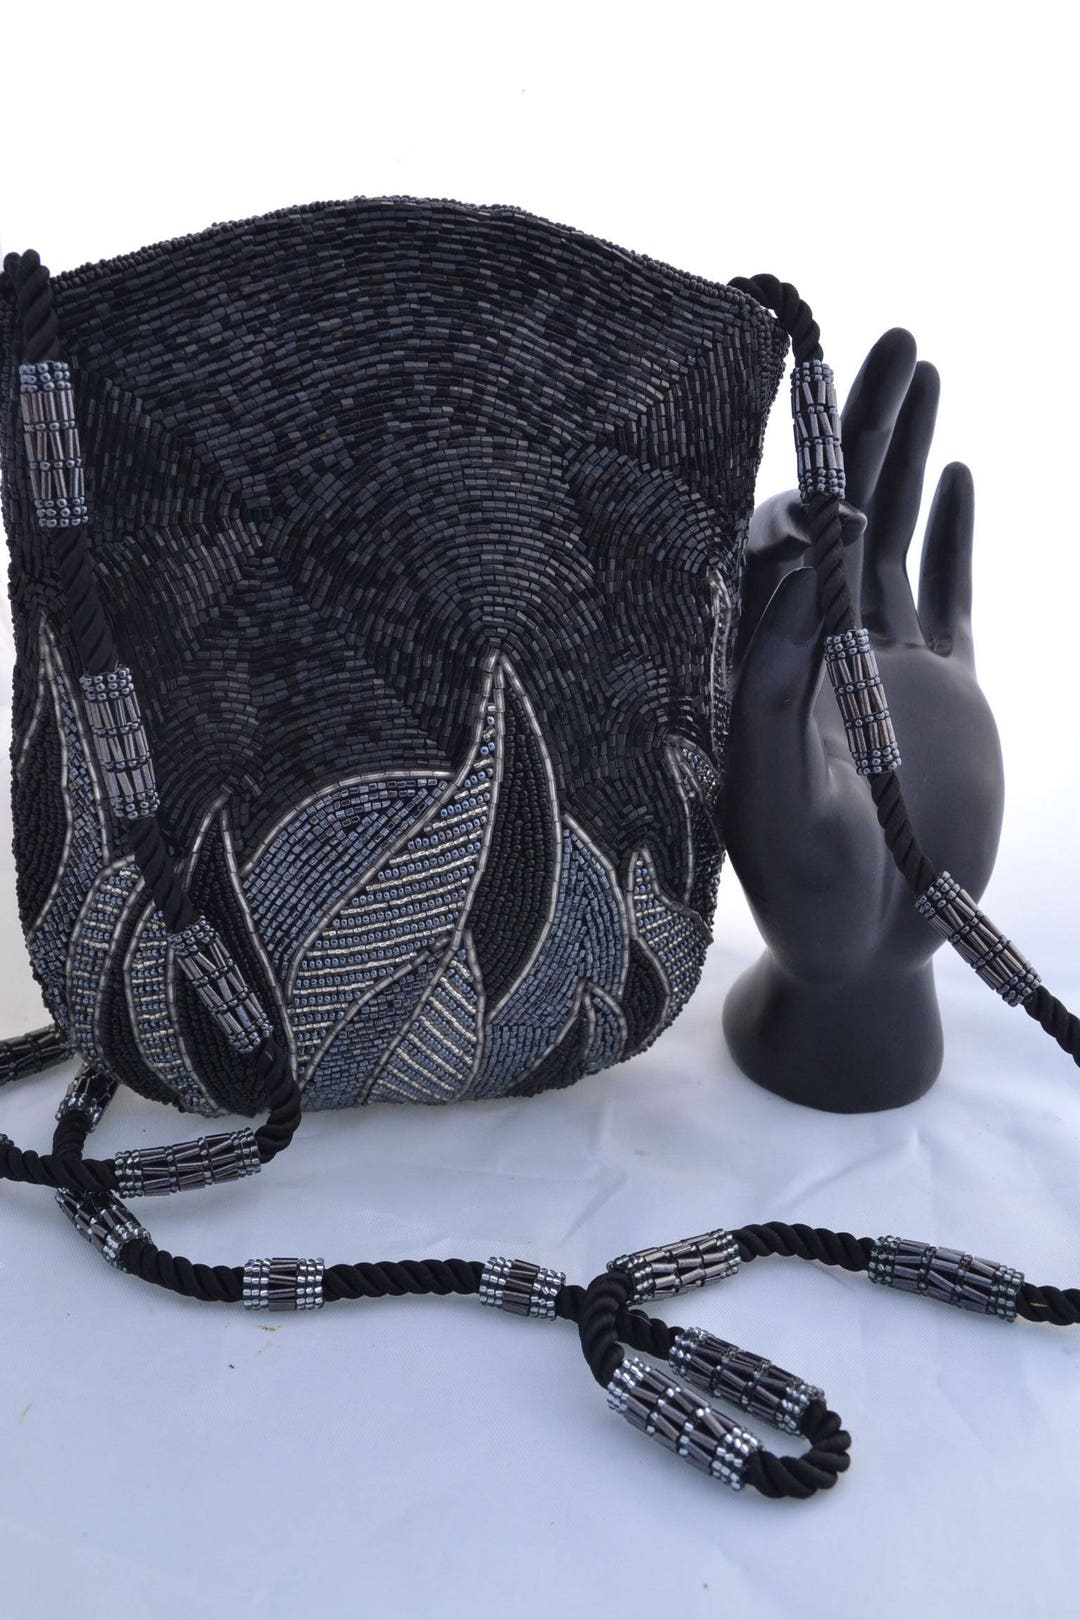 Vintage Jerome's Handbag Black and Silver Hand Beaded Evening Handbag ...